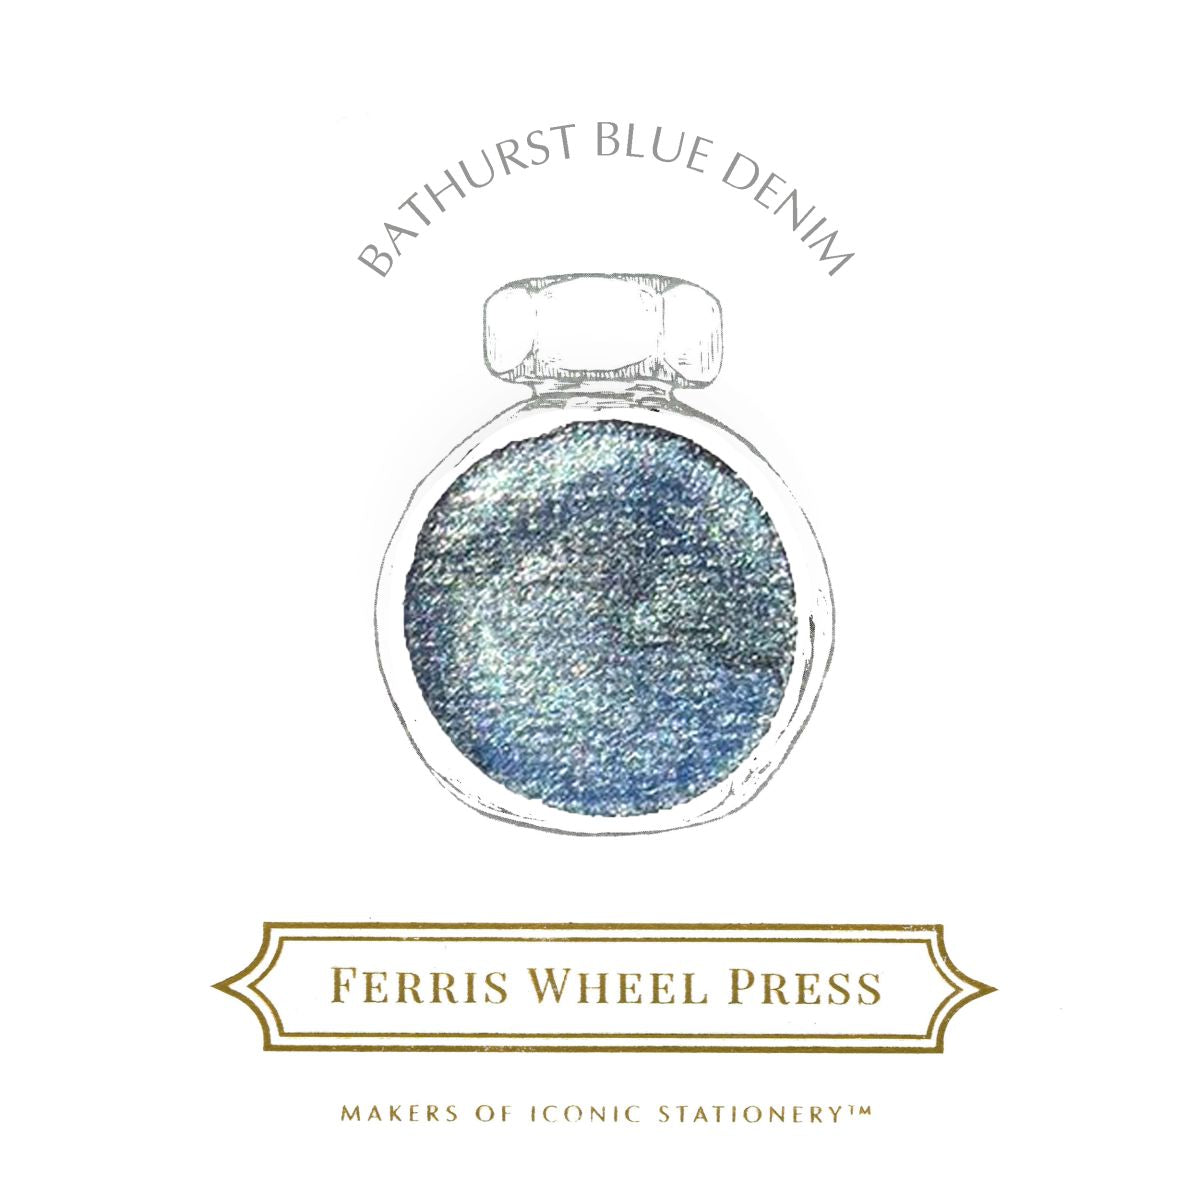 Ferris Wheel Press - Bathurst Blue Denim, 38 ml